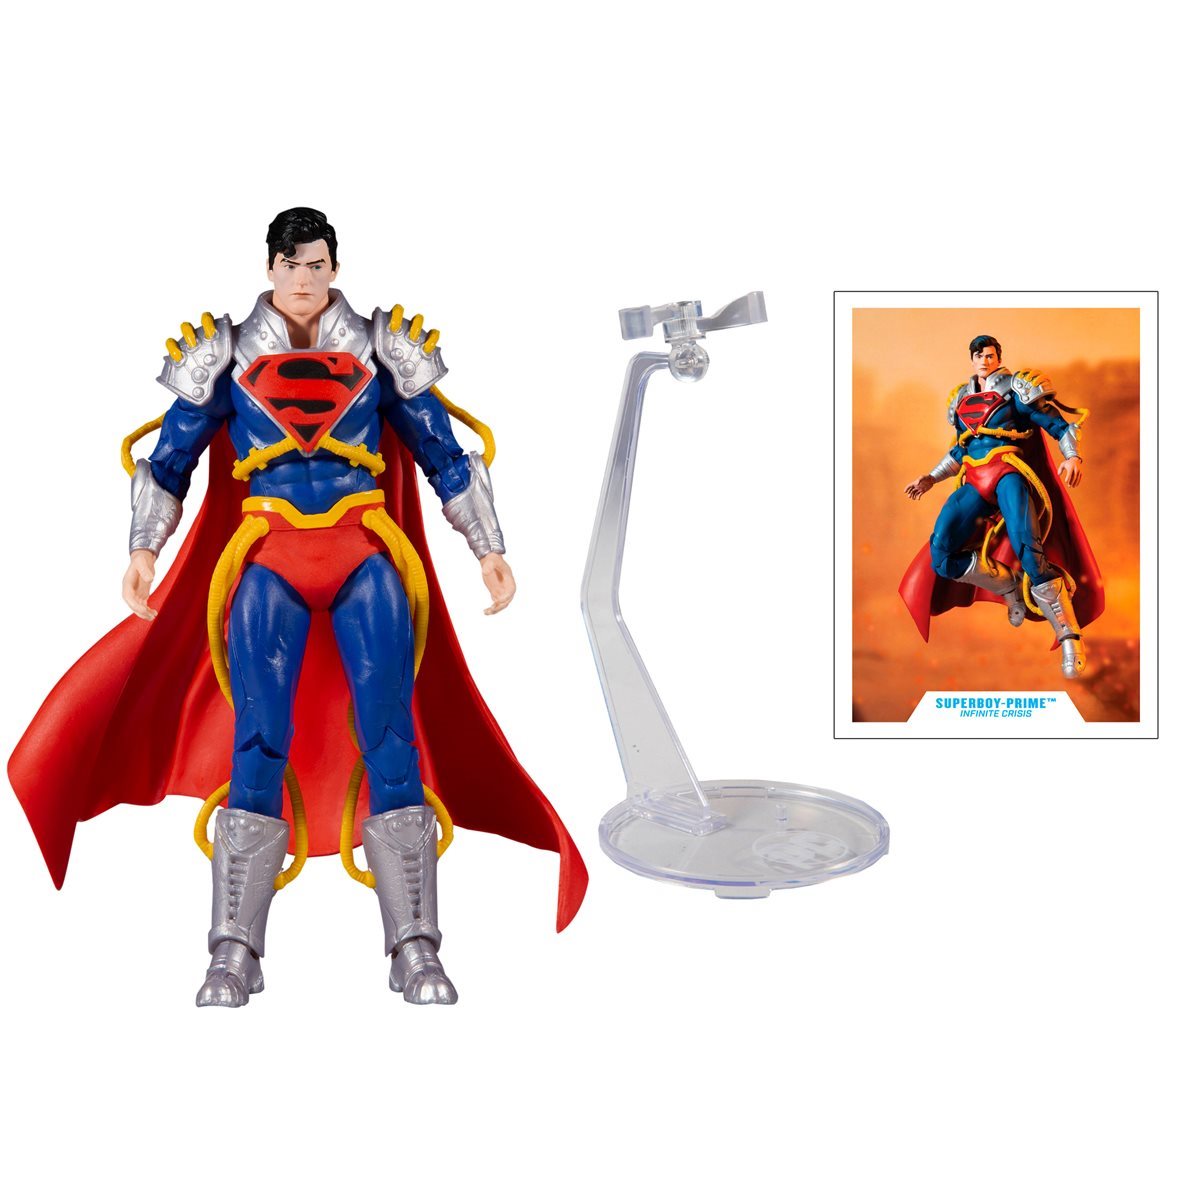 DC Multiverse Superboy Prime Infin Crisis 7 Inch Scale Action Figure